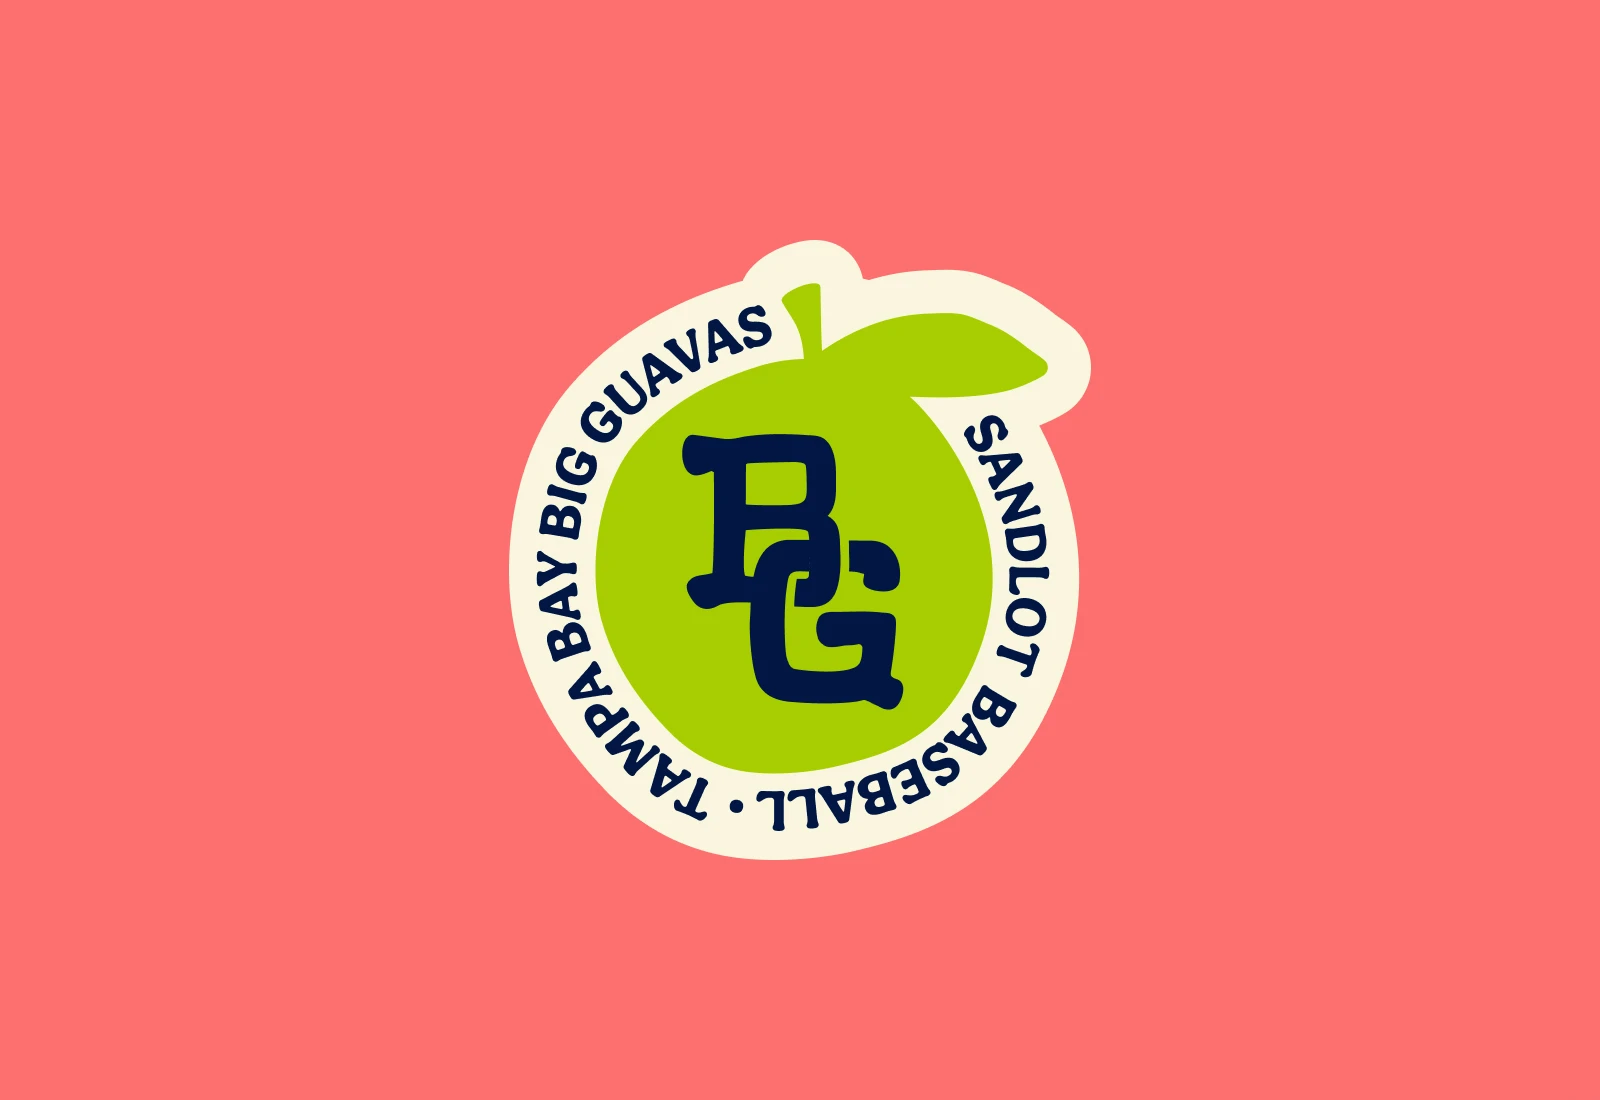 Big Guavas sticker featuring the BG monogram